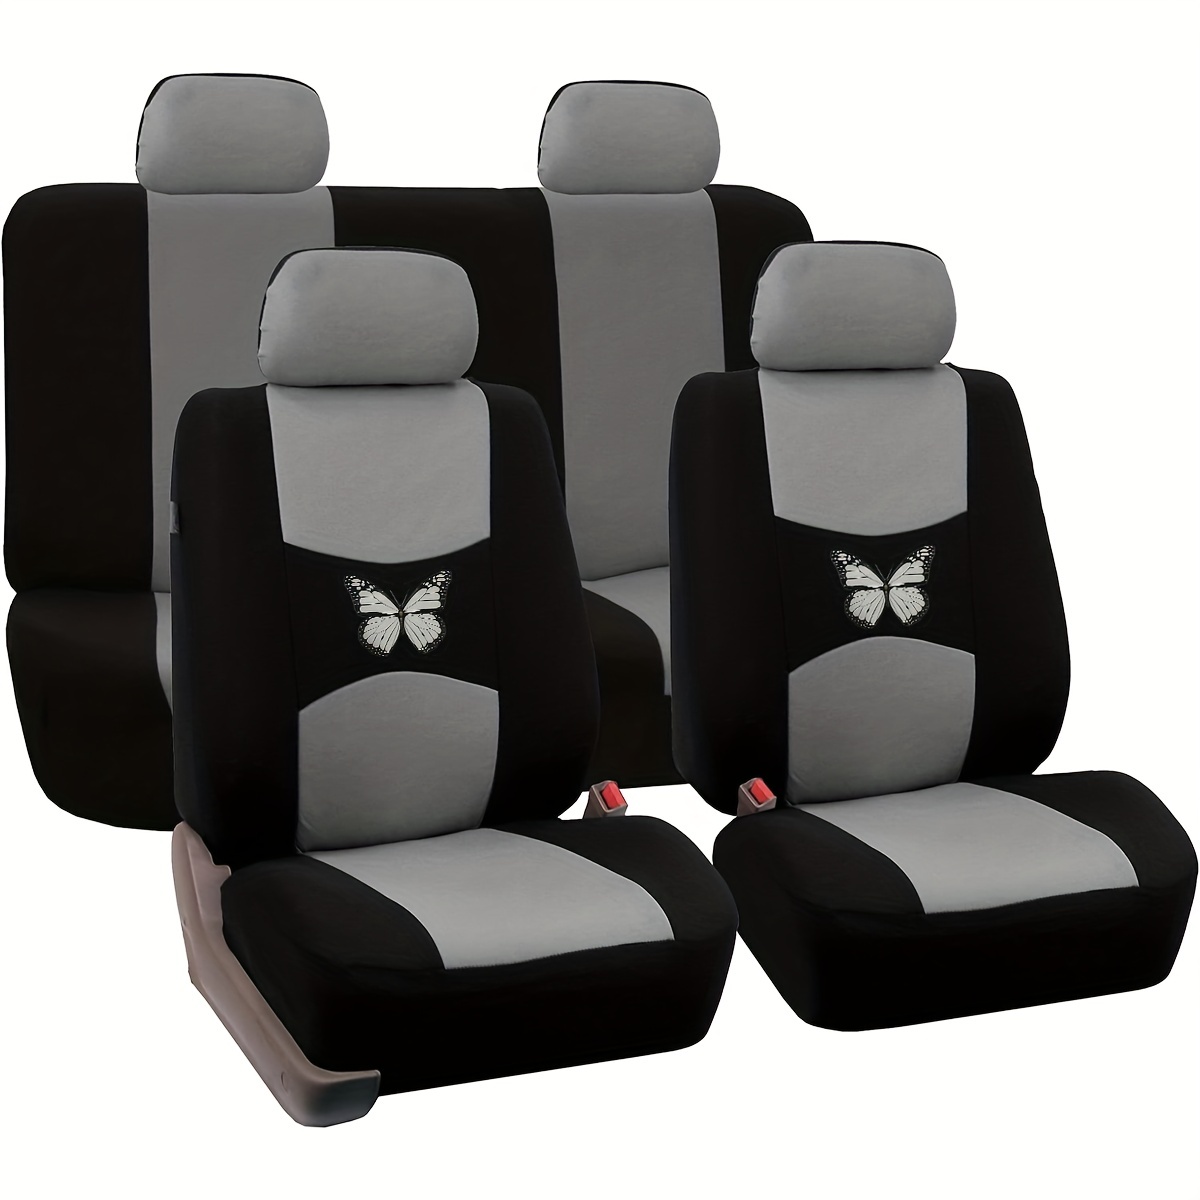 2pcs/1pcs 12V Heated Car Heated Car Seat Cushion Seat Cover Heater